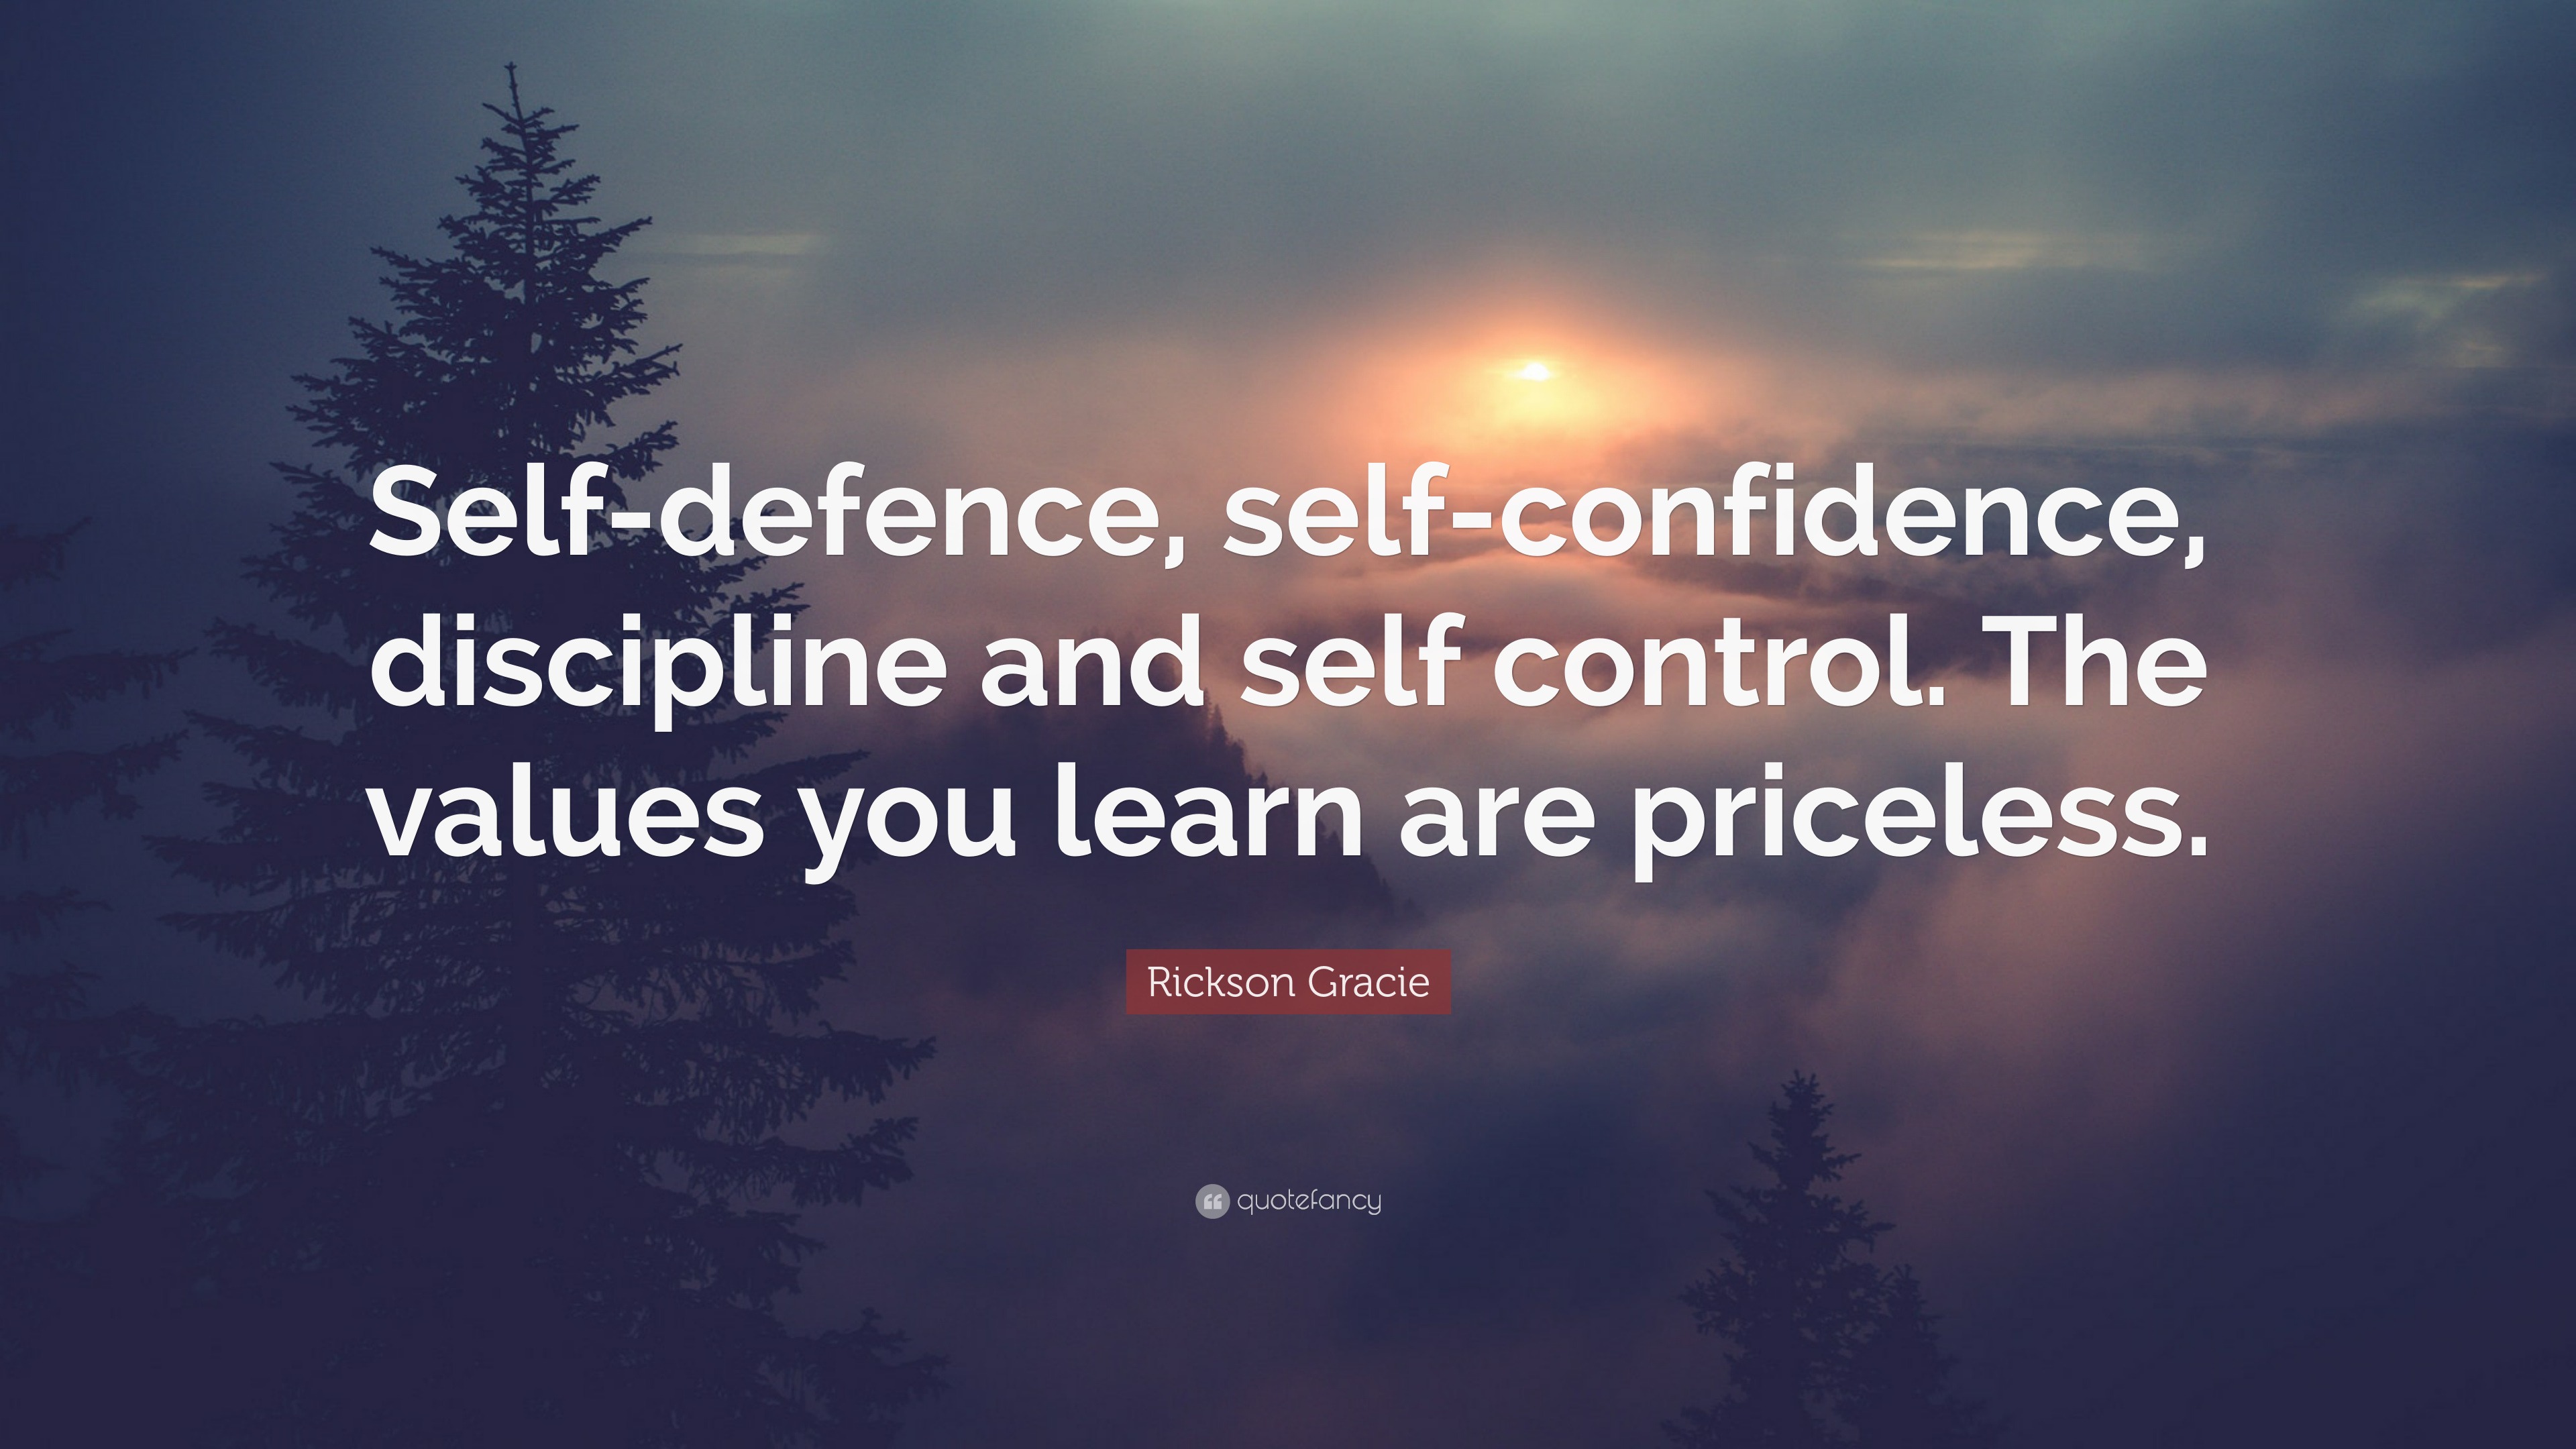 Rickson Gracie Quote: “Self-defence, self-confidence, discipline and ...